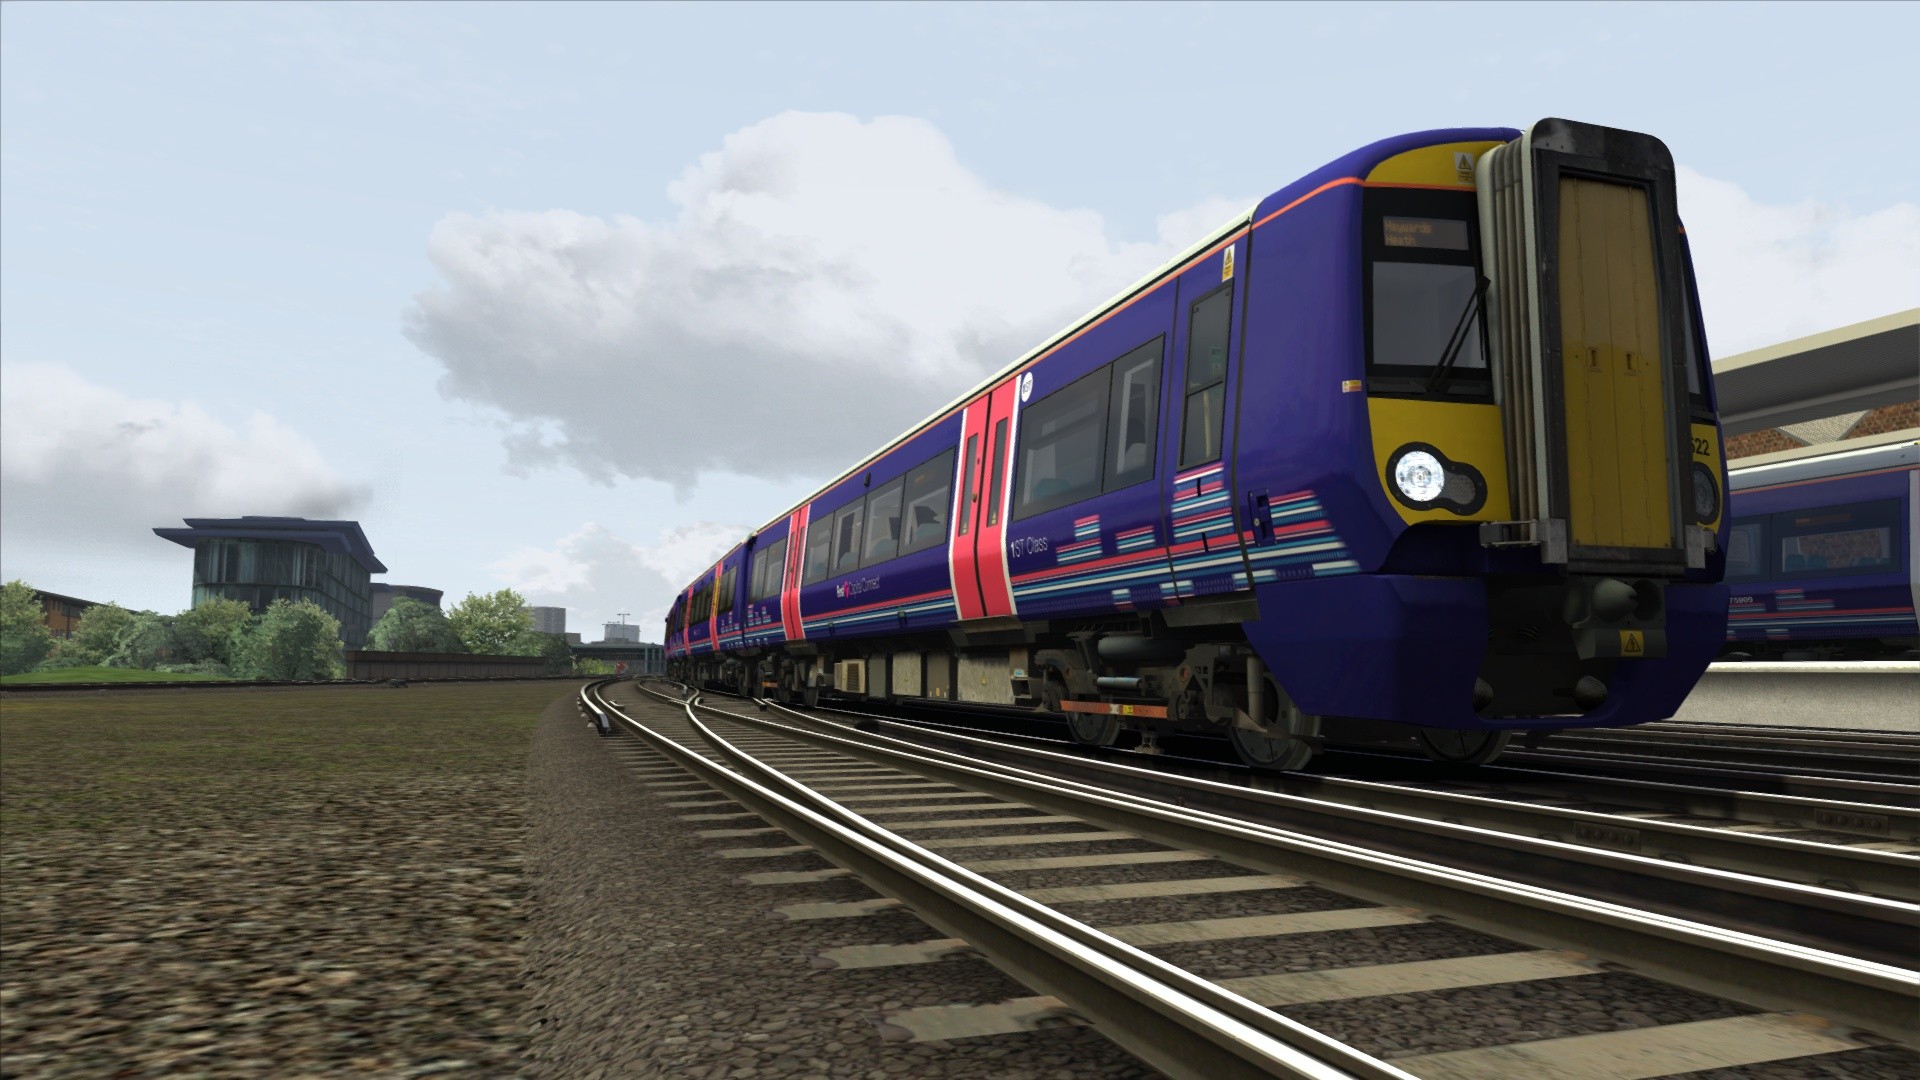 Train Simulator: First Capital Connect Class 377 EMU Add-On screenshot